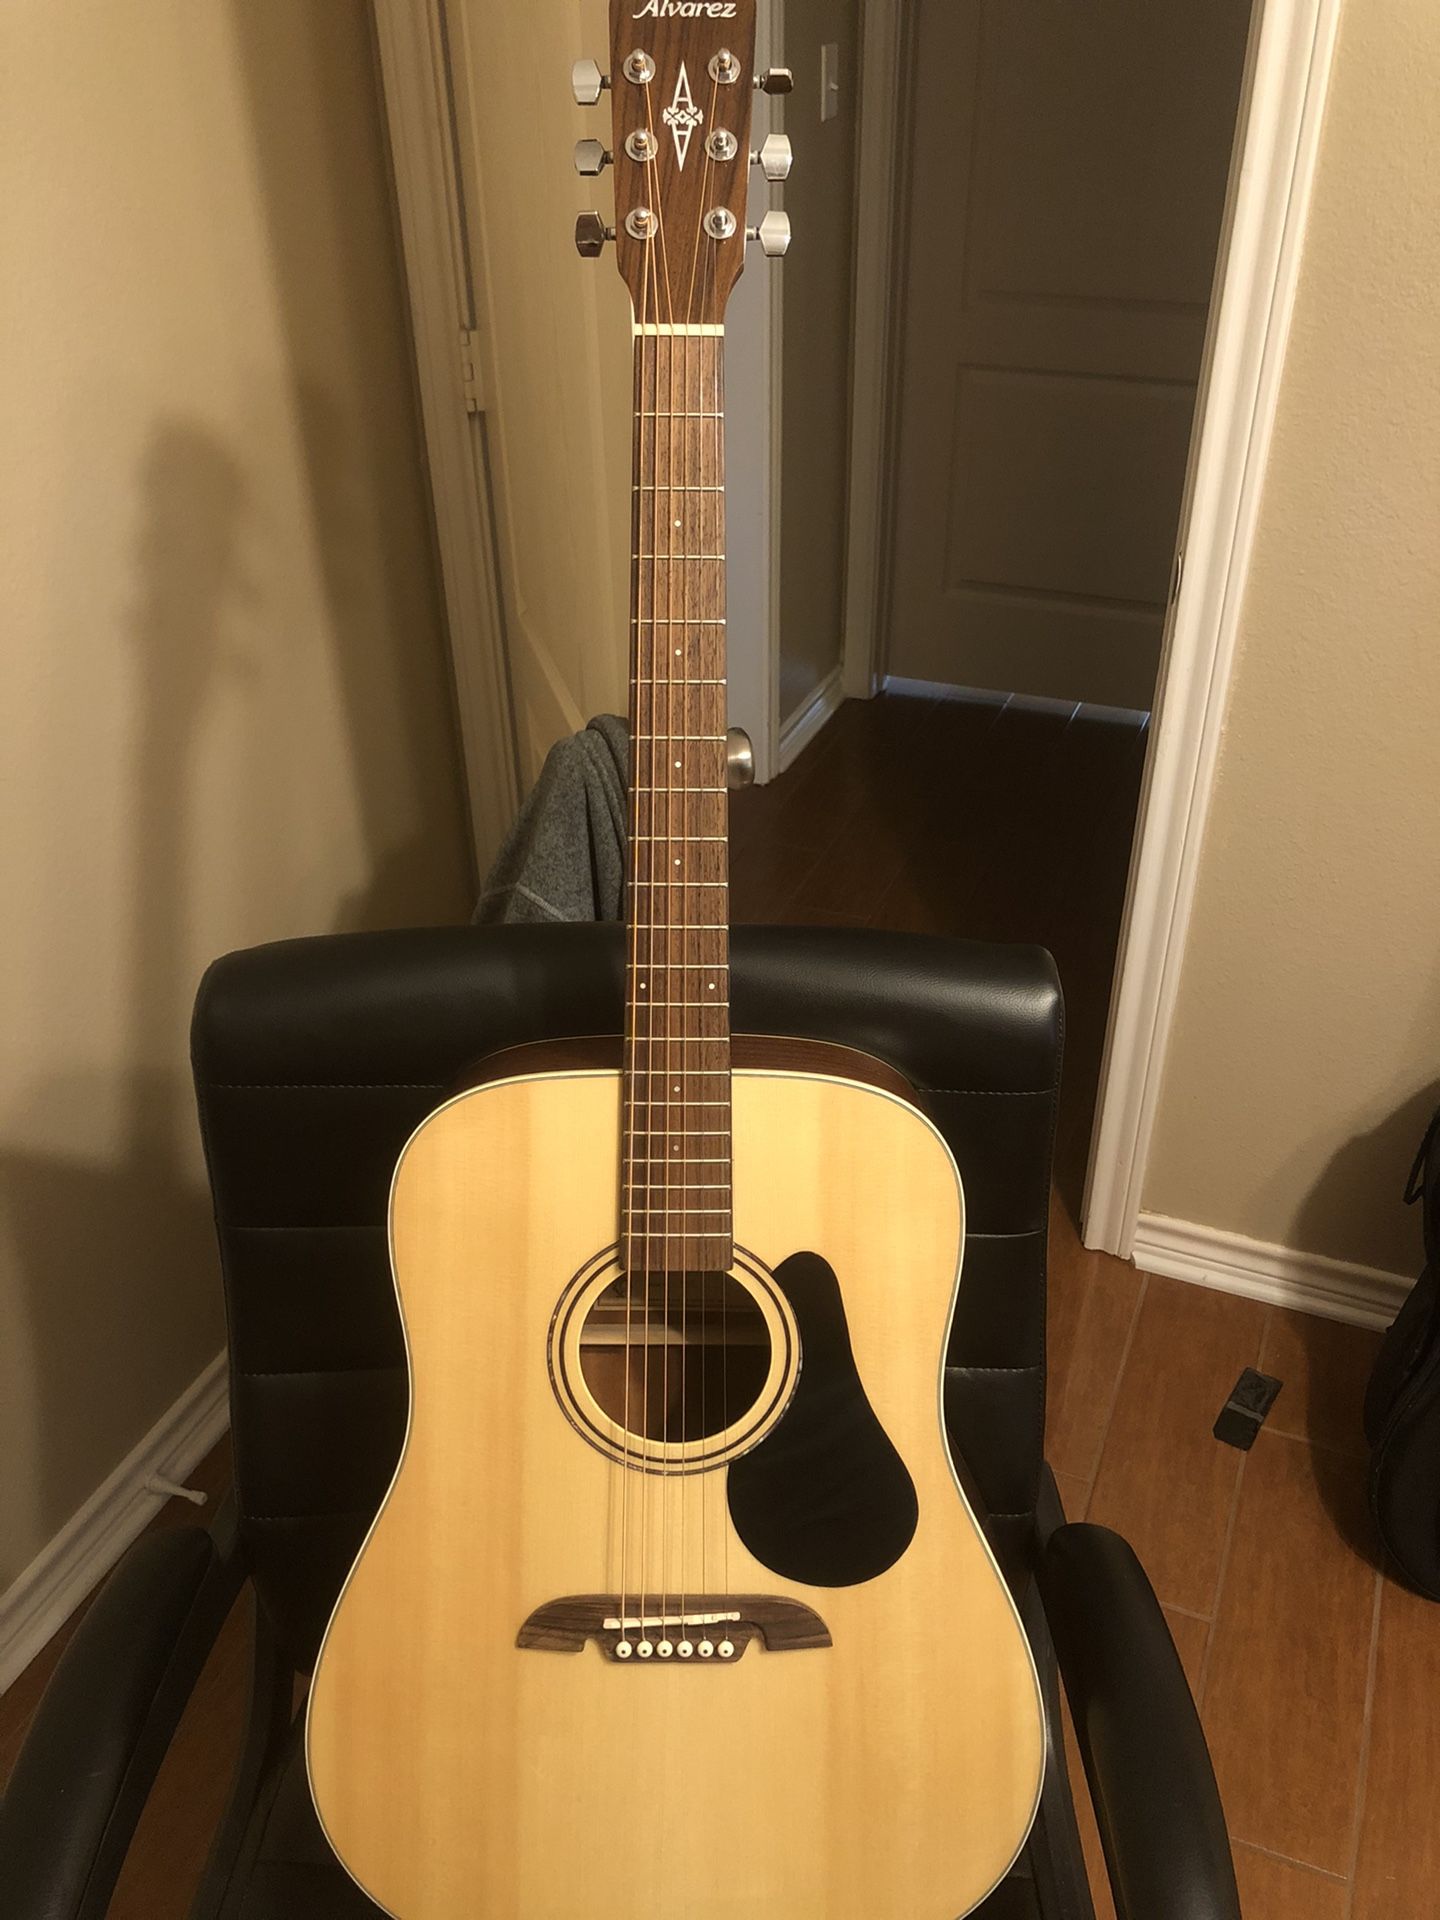 Alvarez Guitar (Great Condition)